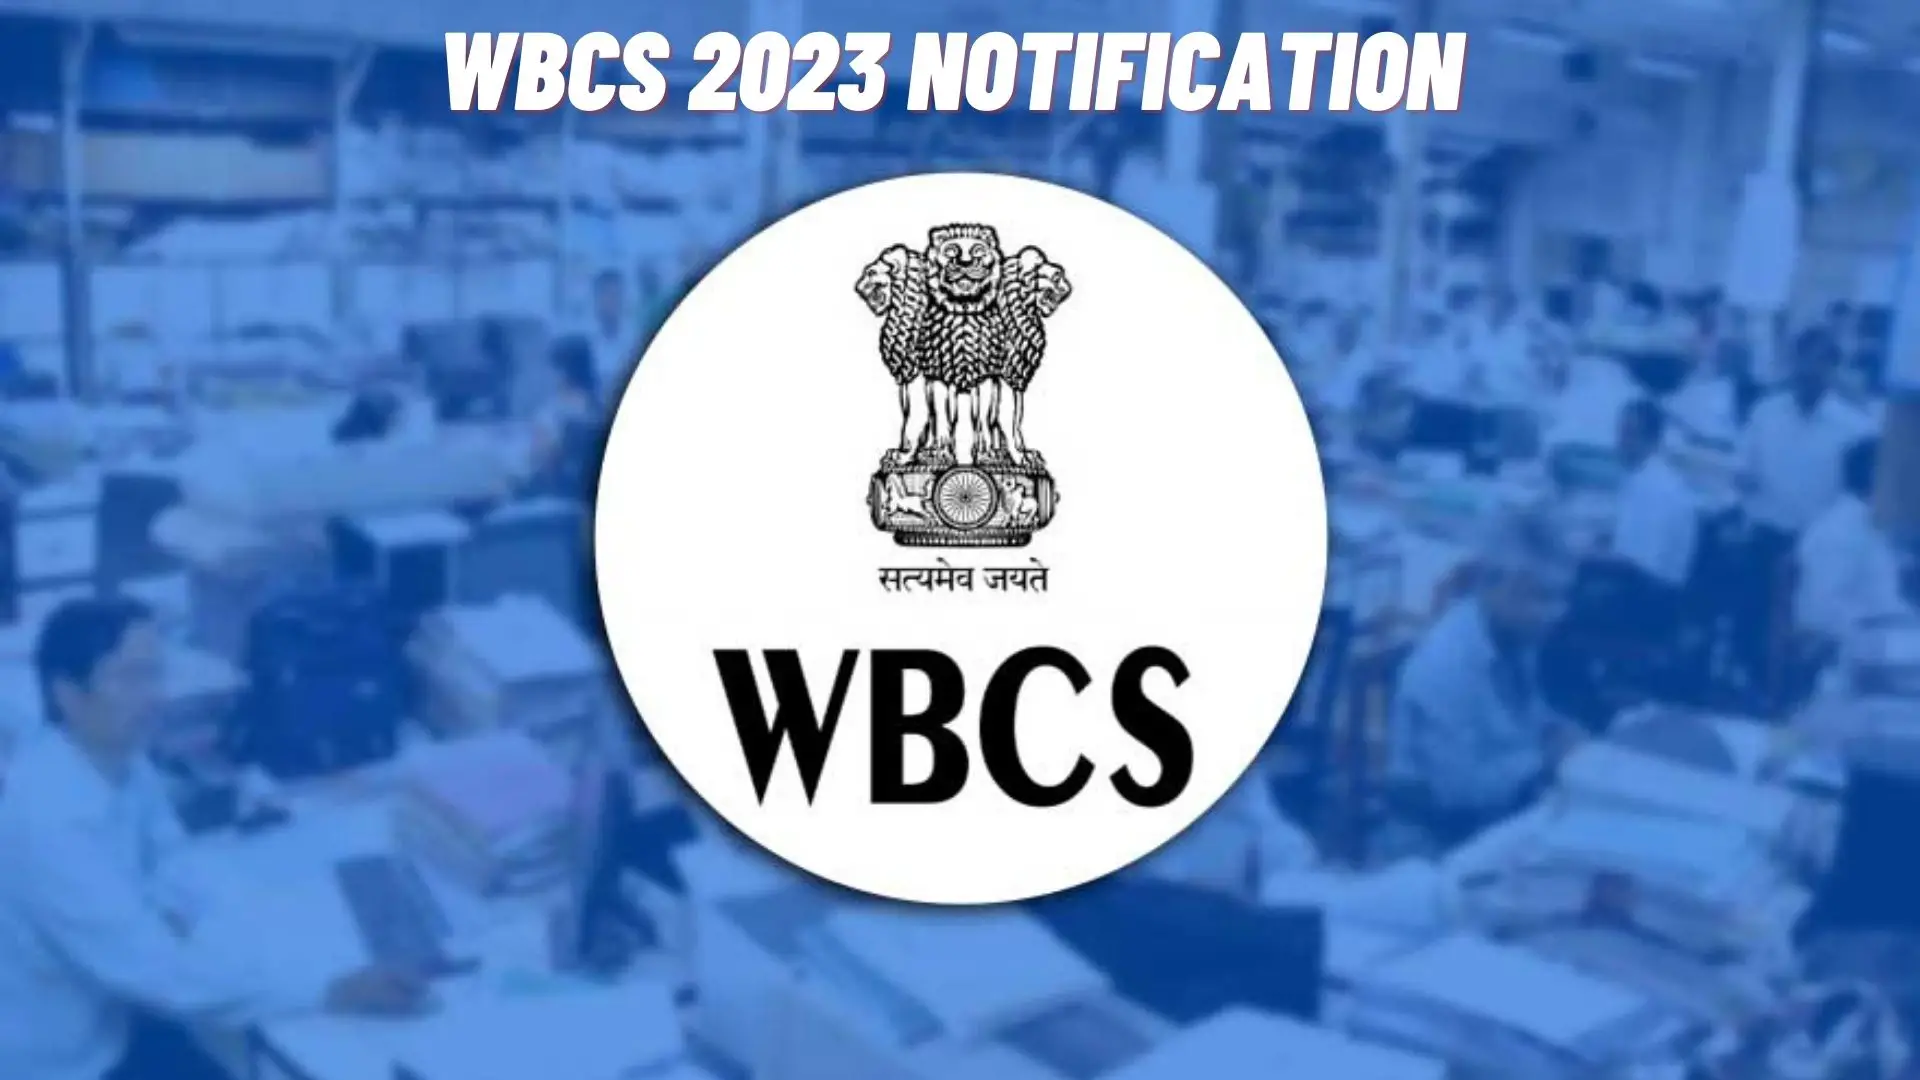 WBCS 2023 Notification